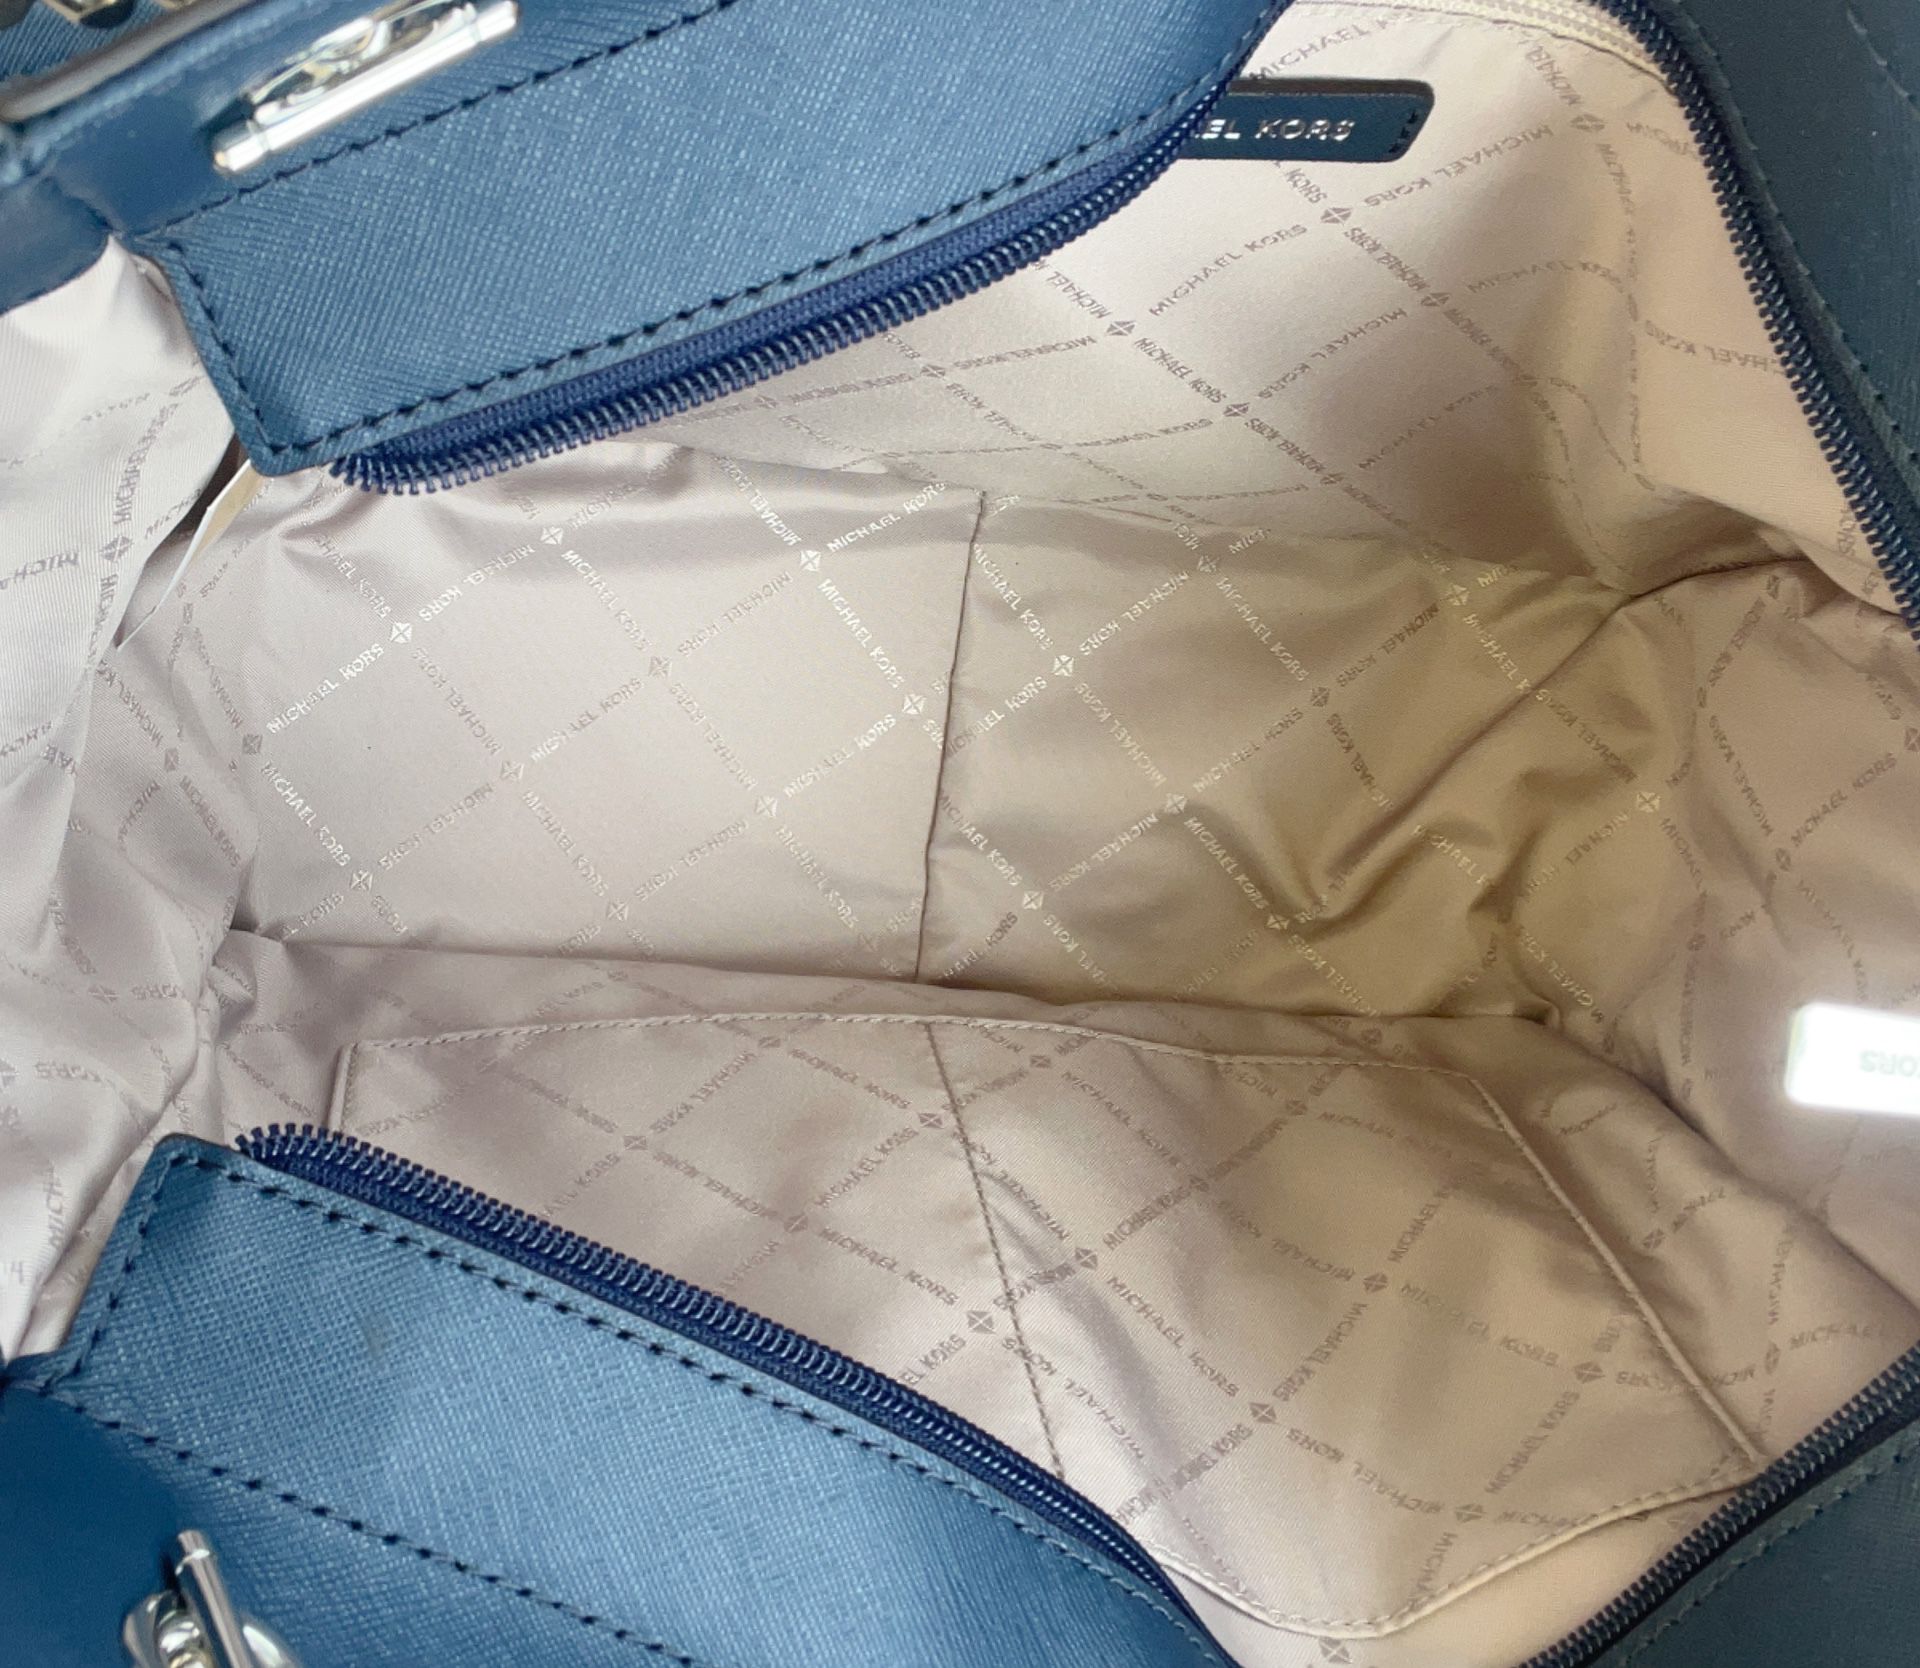 MICHAEL MICHAEL KORS Jet Set Large Saffiano Leather Shoulder Bag for Sale  in Murrieta, CA - OfferUp